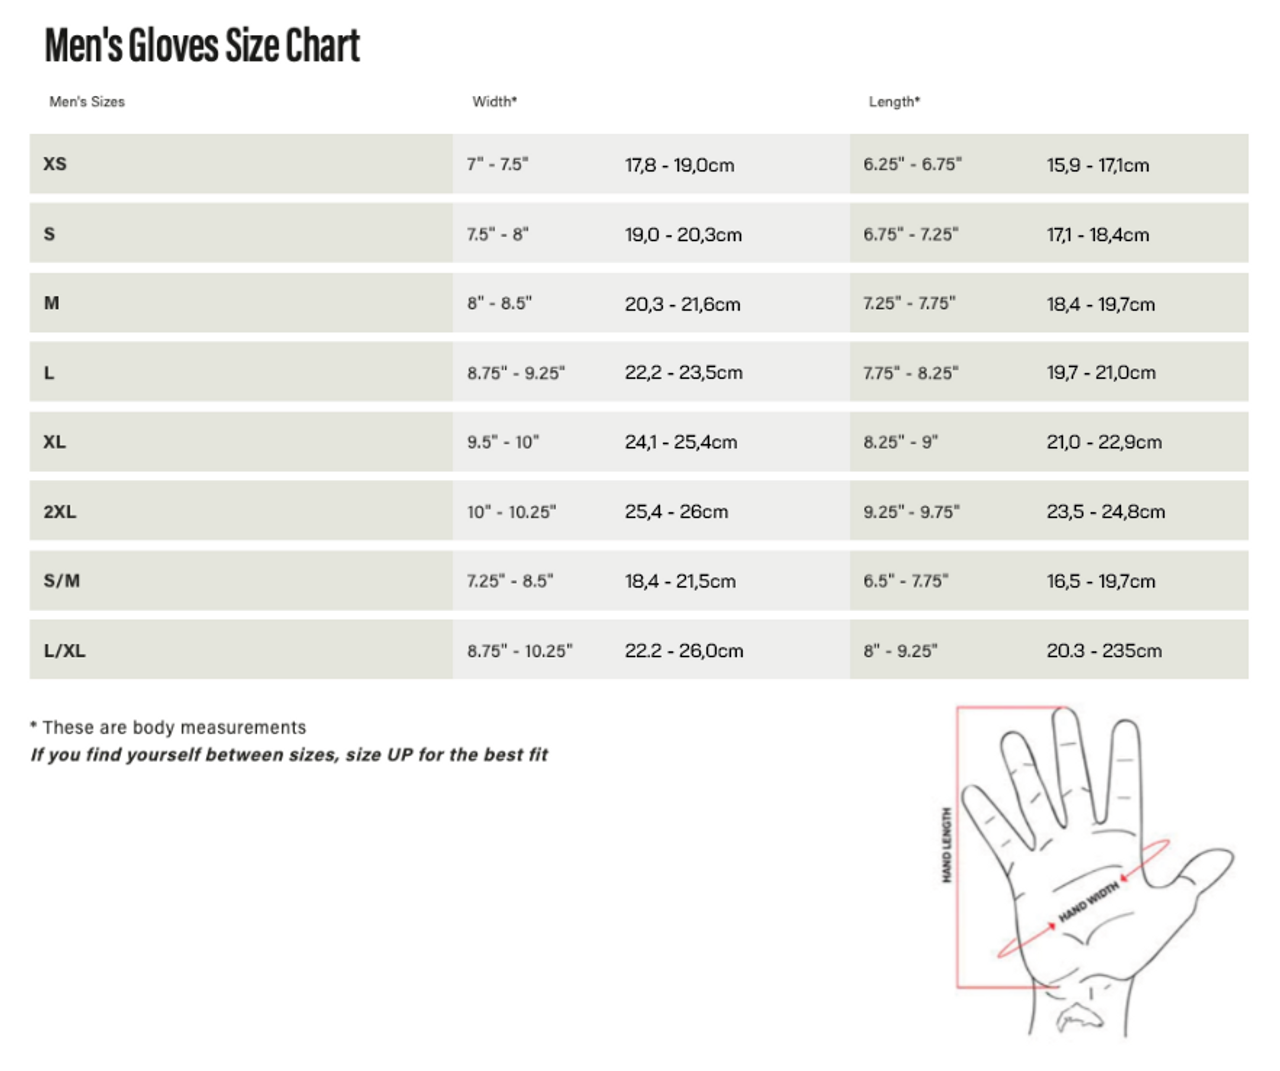 Simms Solarflex Guide Glove - Hex FLO Camo Steel XL